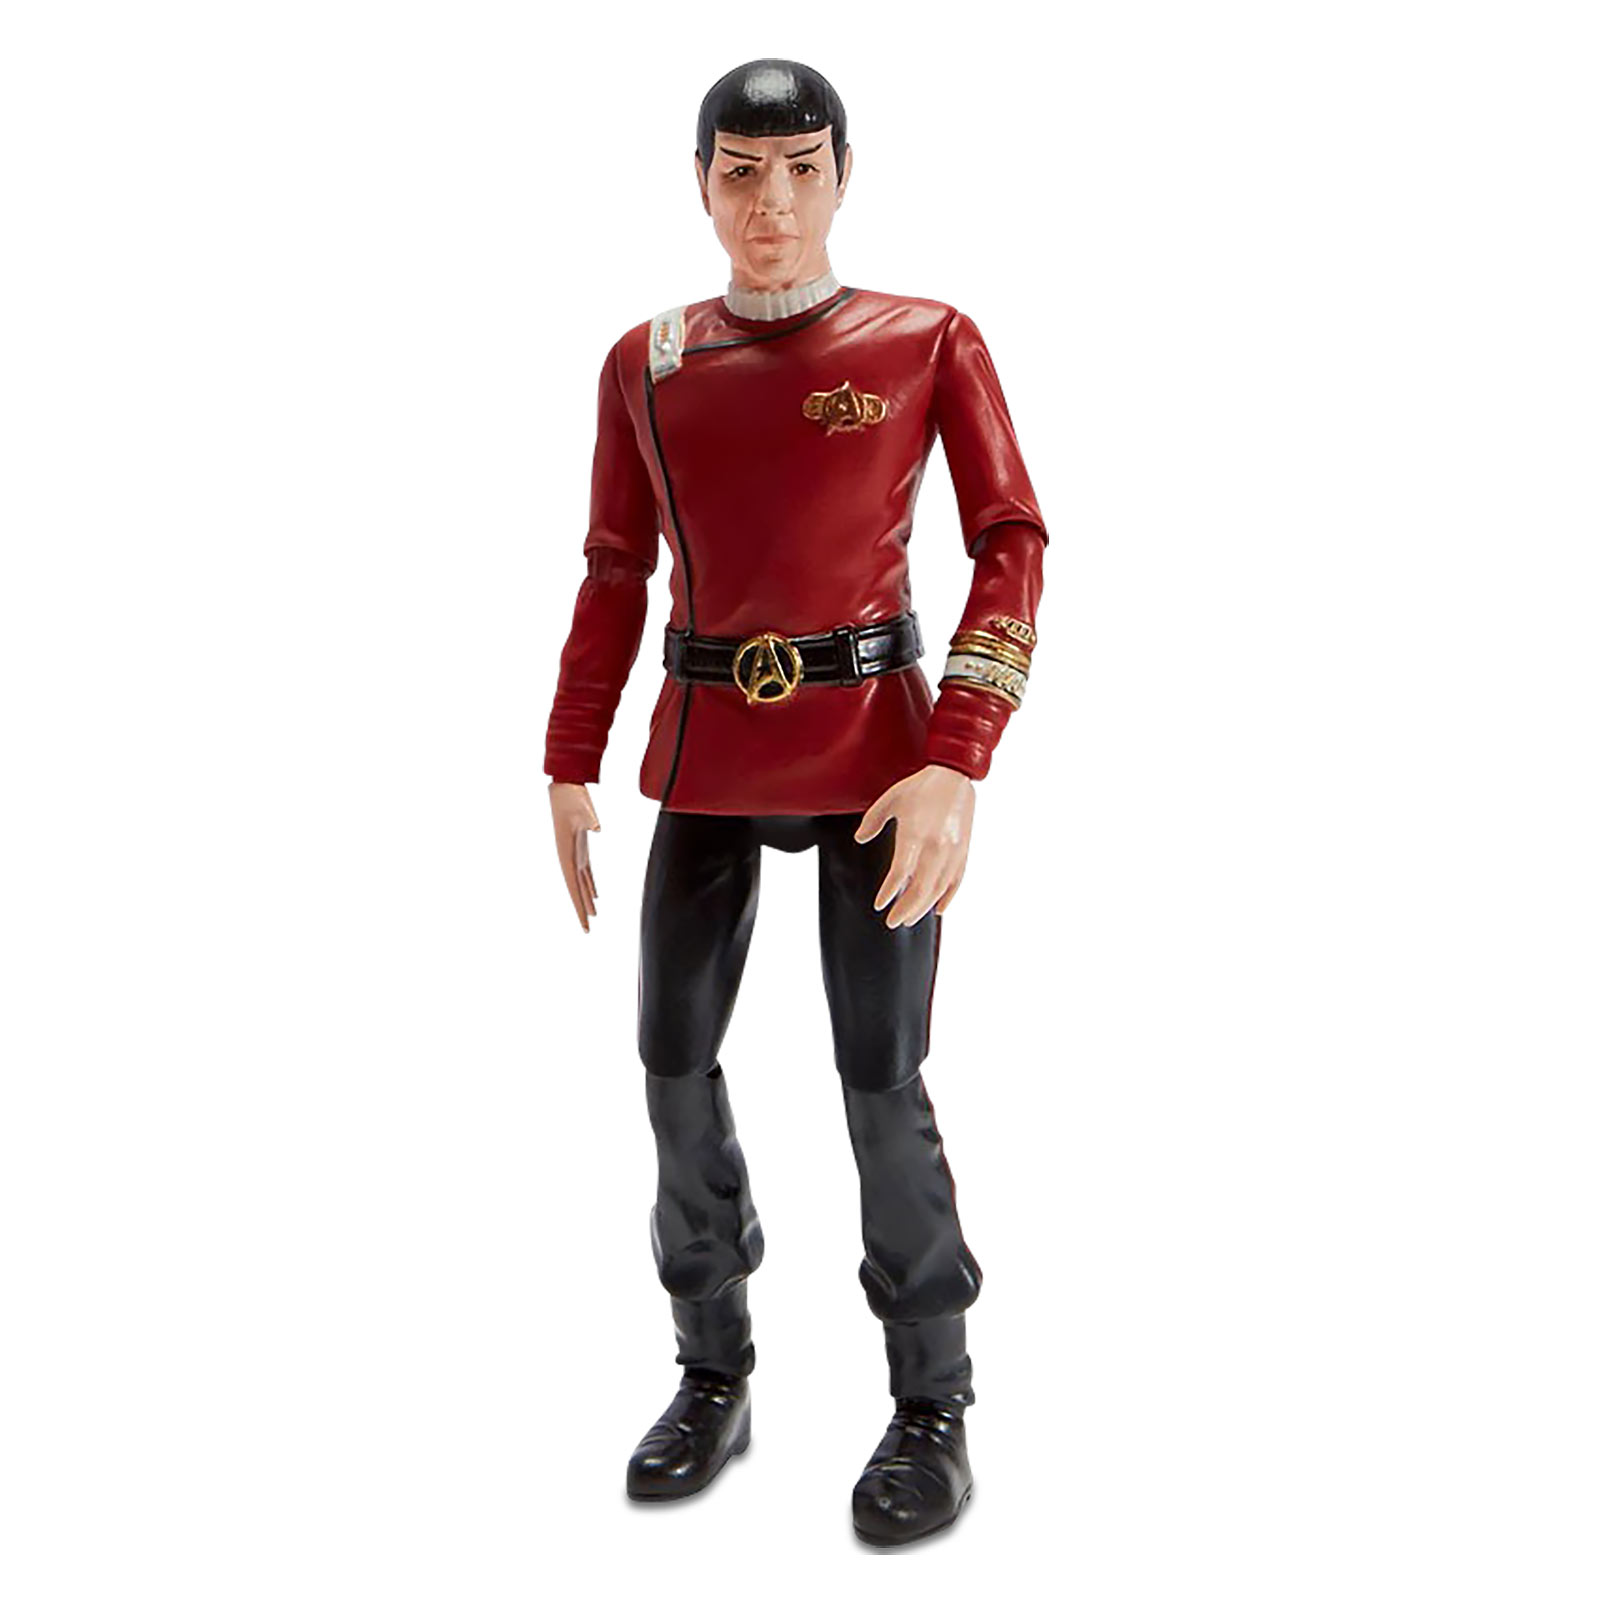 Star Trek - Figurine d'action Spock